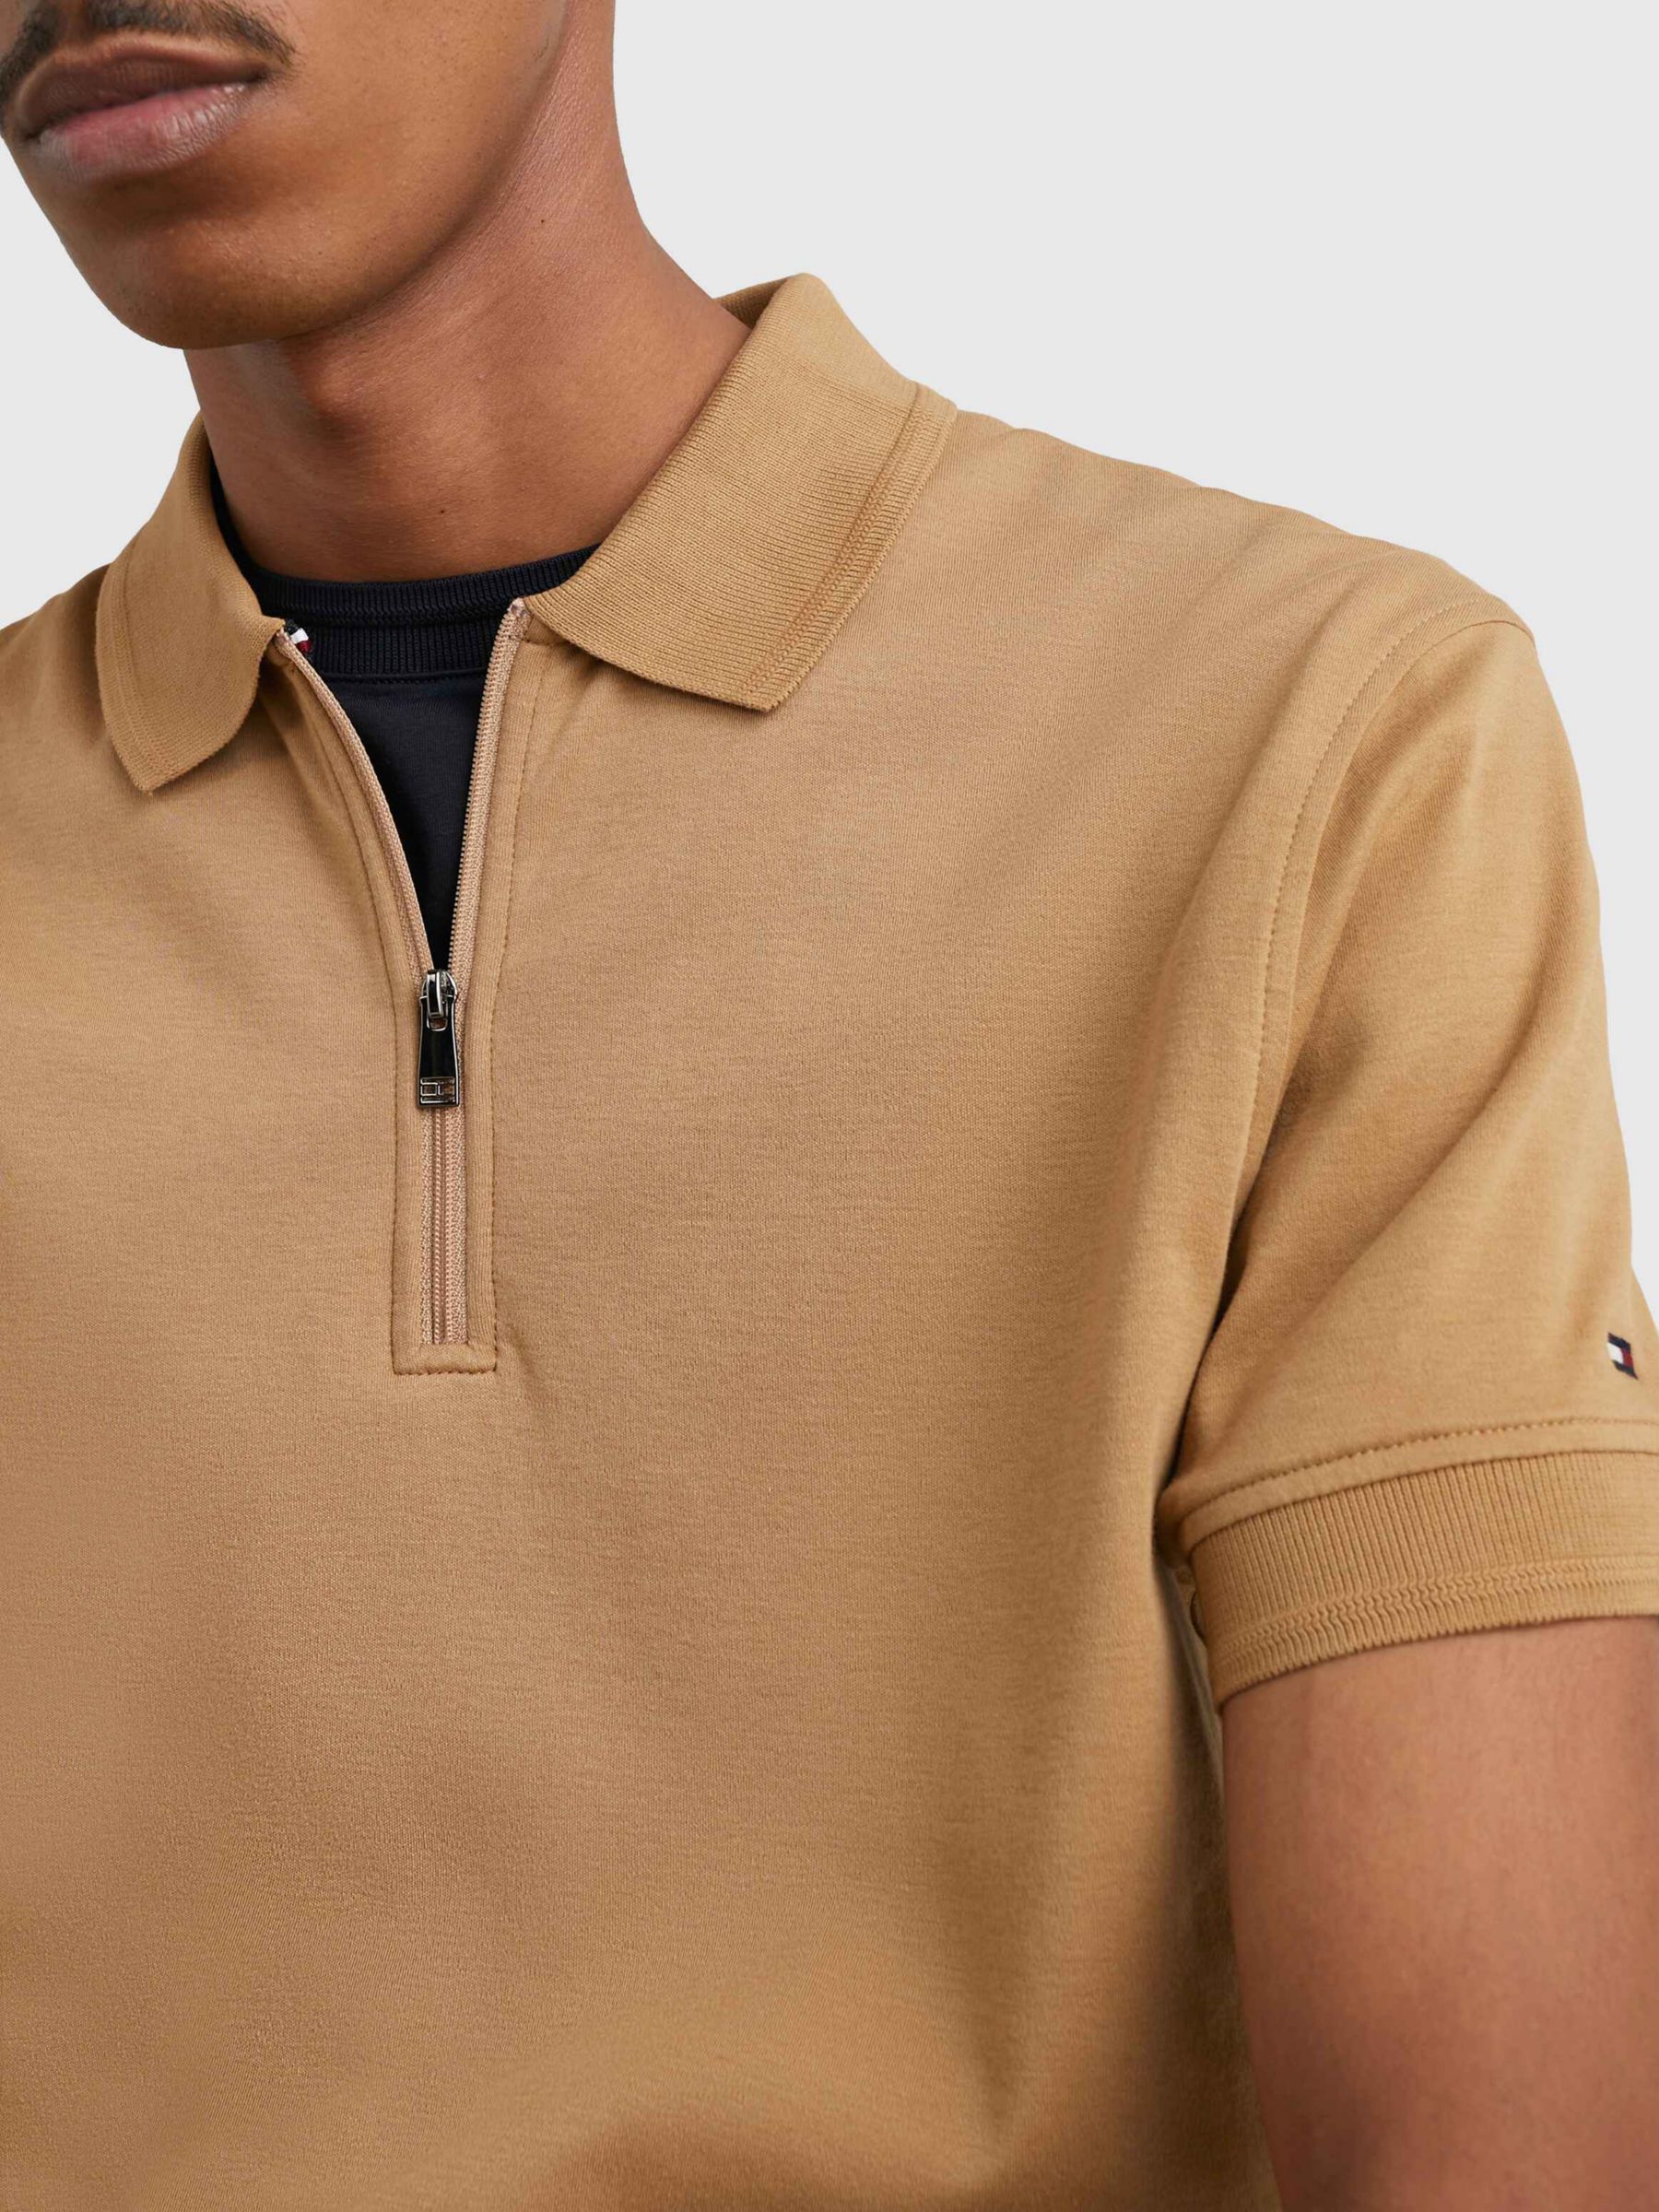 Tommy Hilfiger Zip Neck Slim Fit Polo Shirt, Countryside Khaki, XS